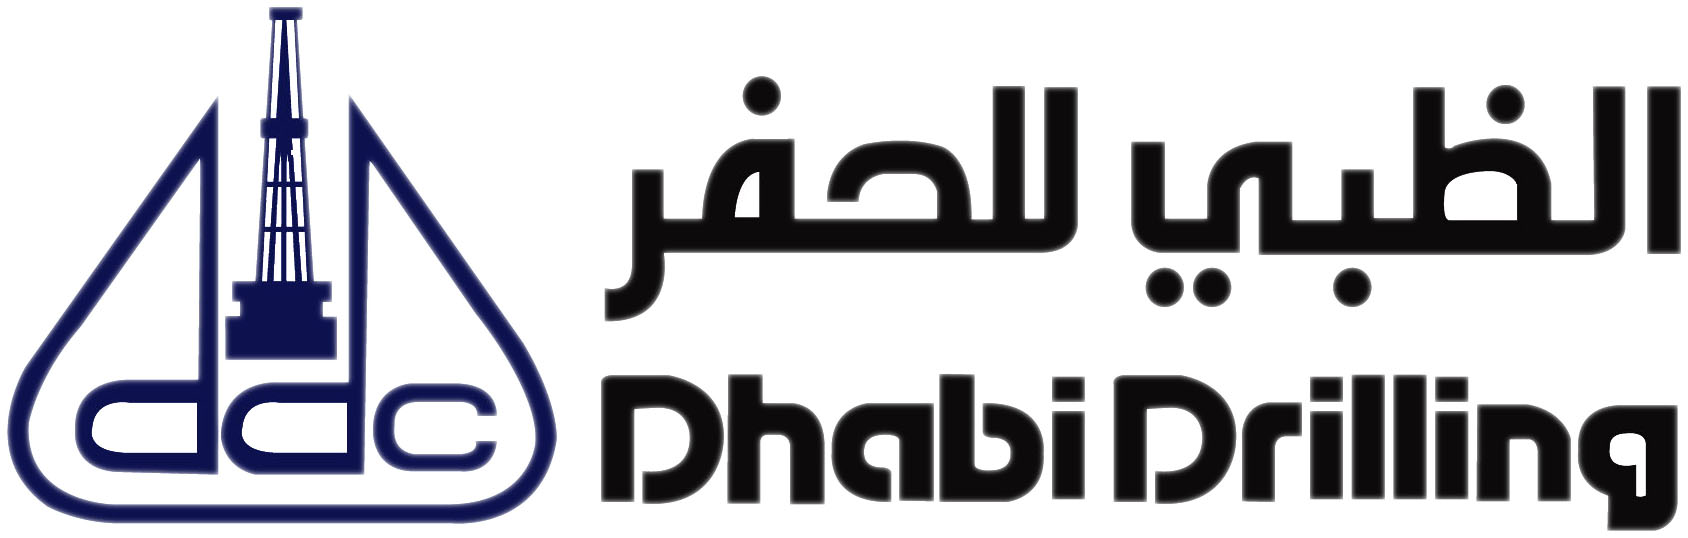 DHABI DRILLING